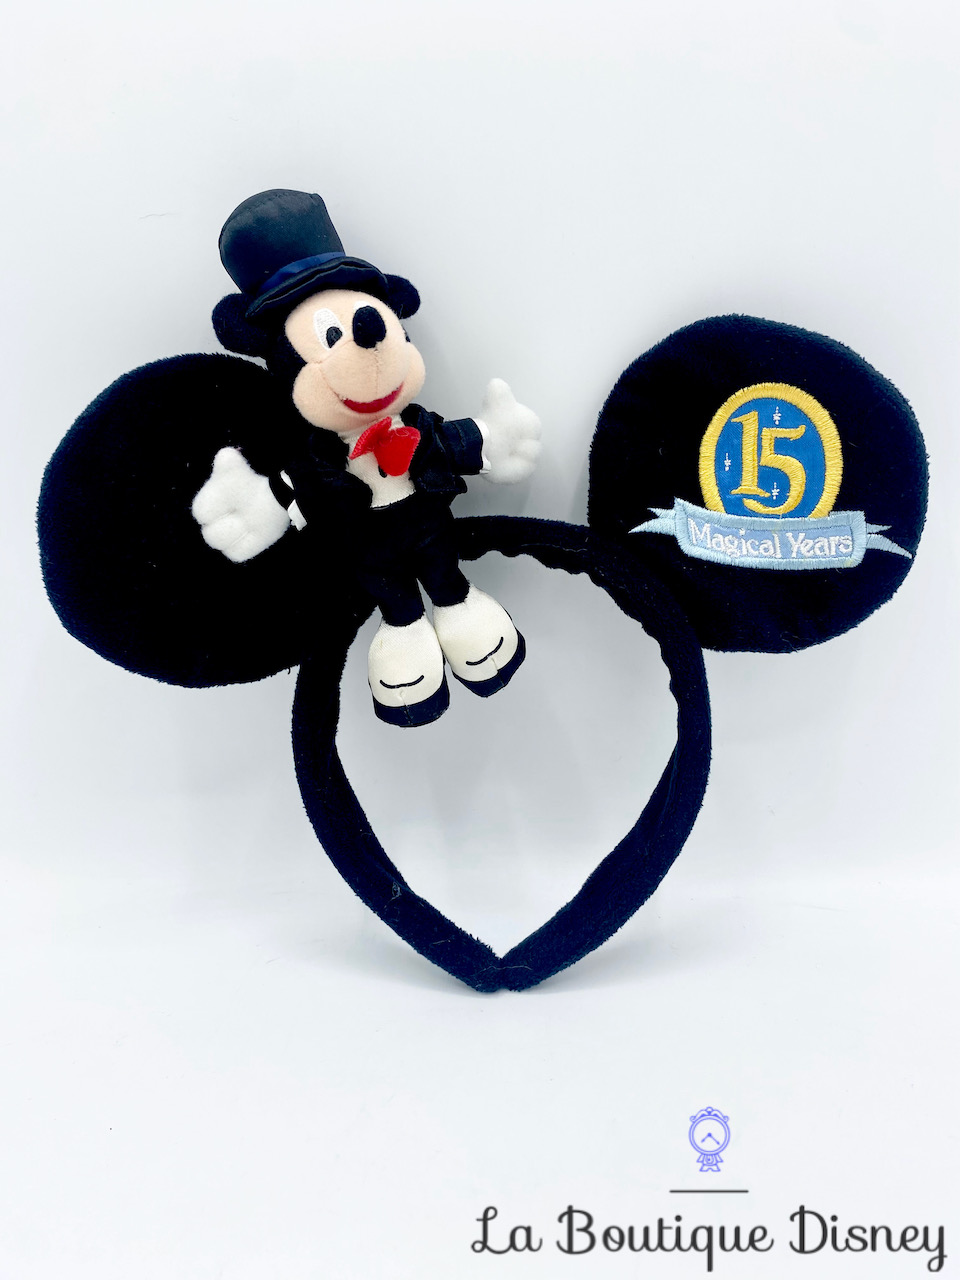 Serre-tête Oreilles Mickey™ Mouse - Disney - Enfant - Noir